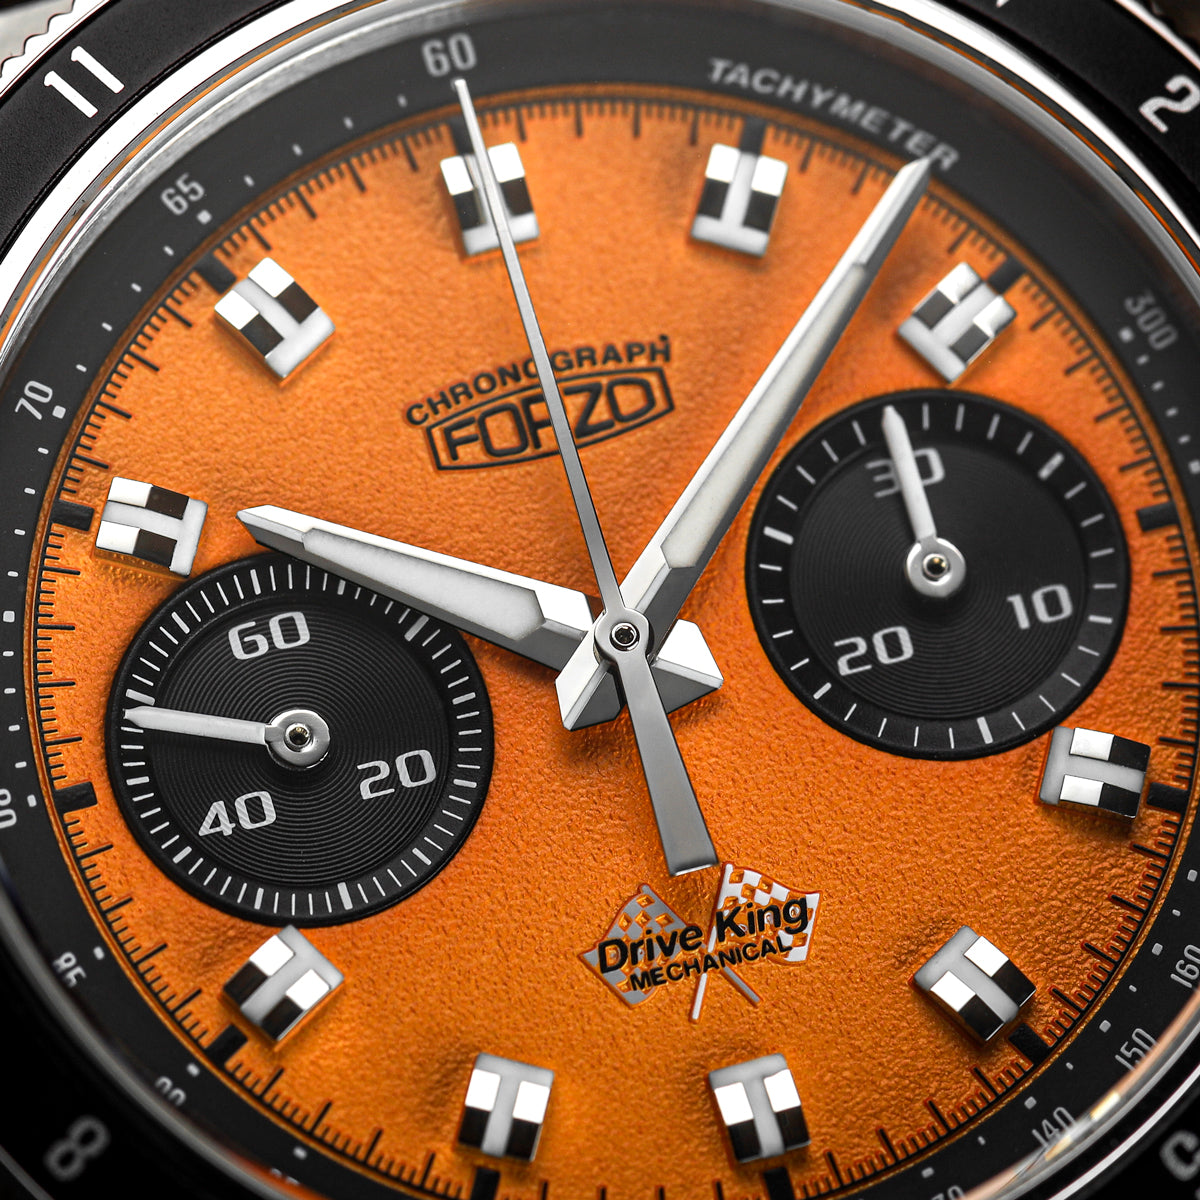 FORZO Drive King Mechanical Chronograph - Orange Dial - 5-Link Bracelet - additional image 2